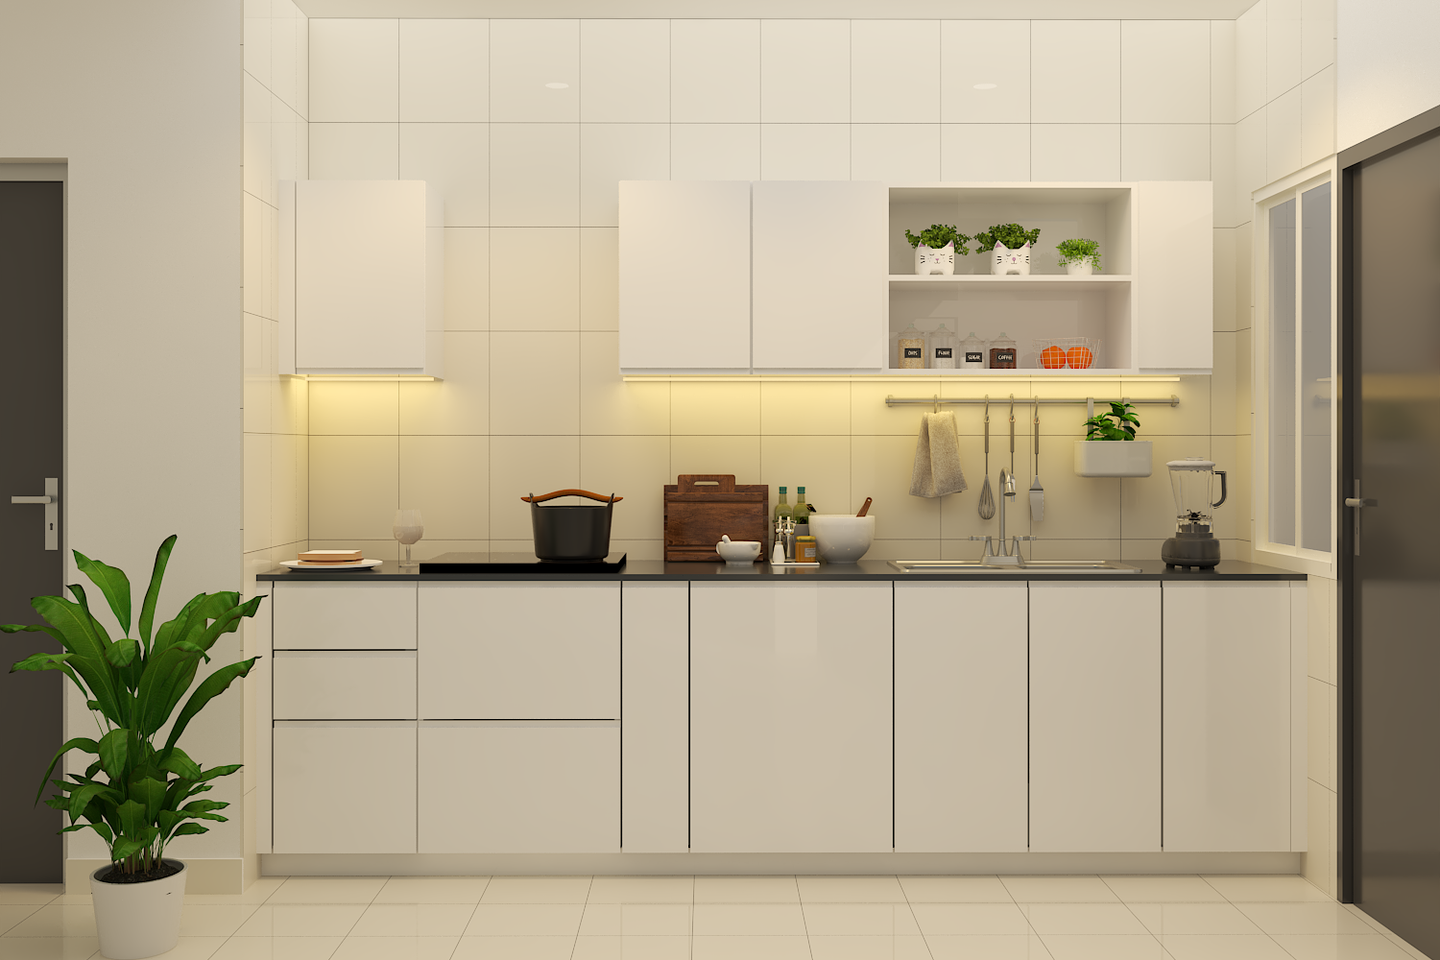 Minimal Kitchen Dado Tiles Design With A White Matte Finish